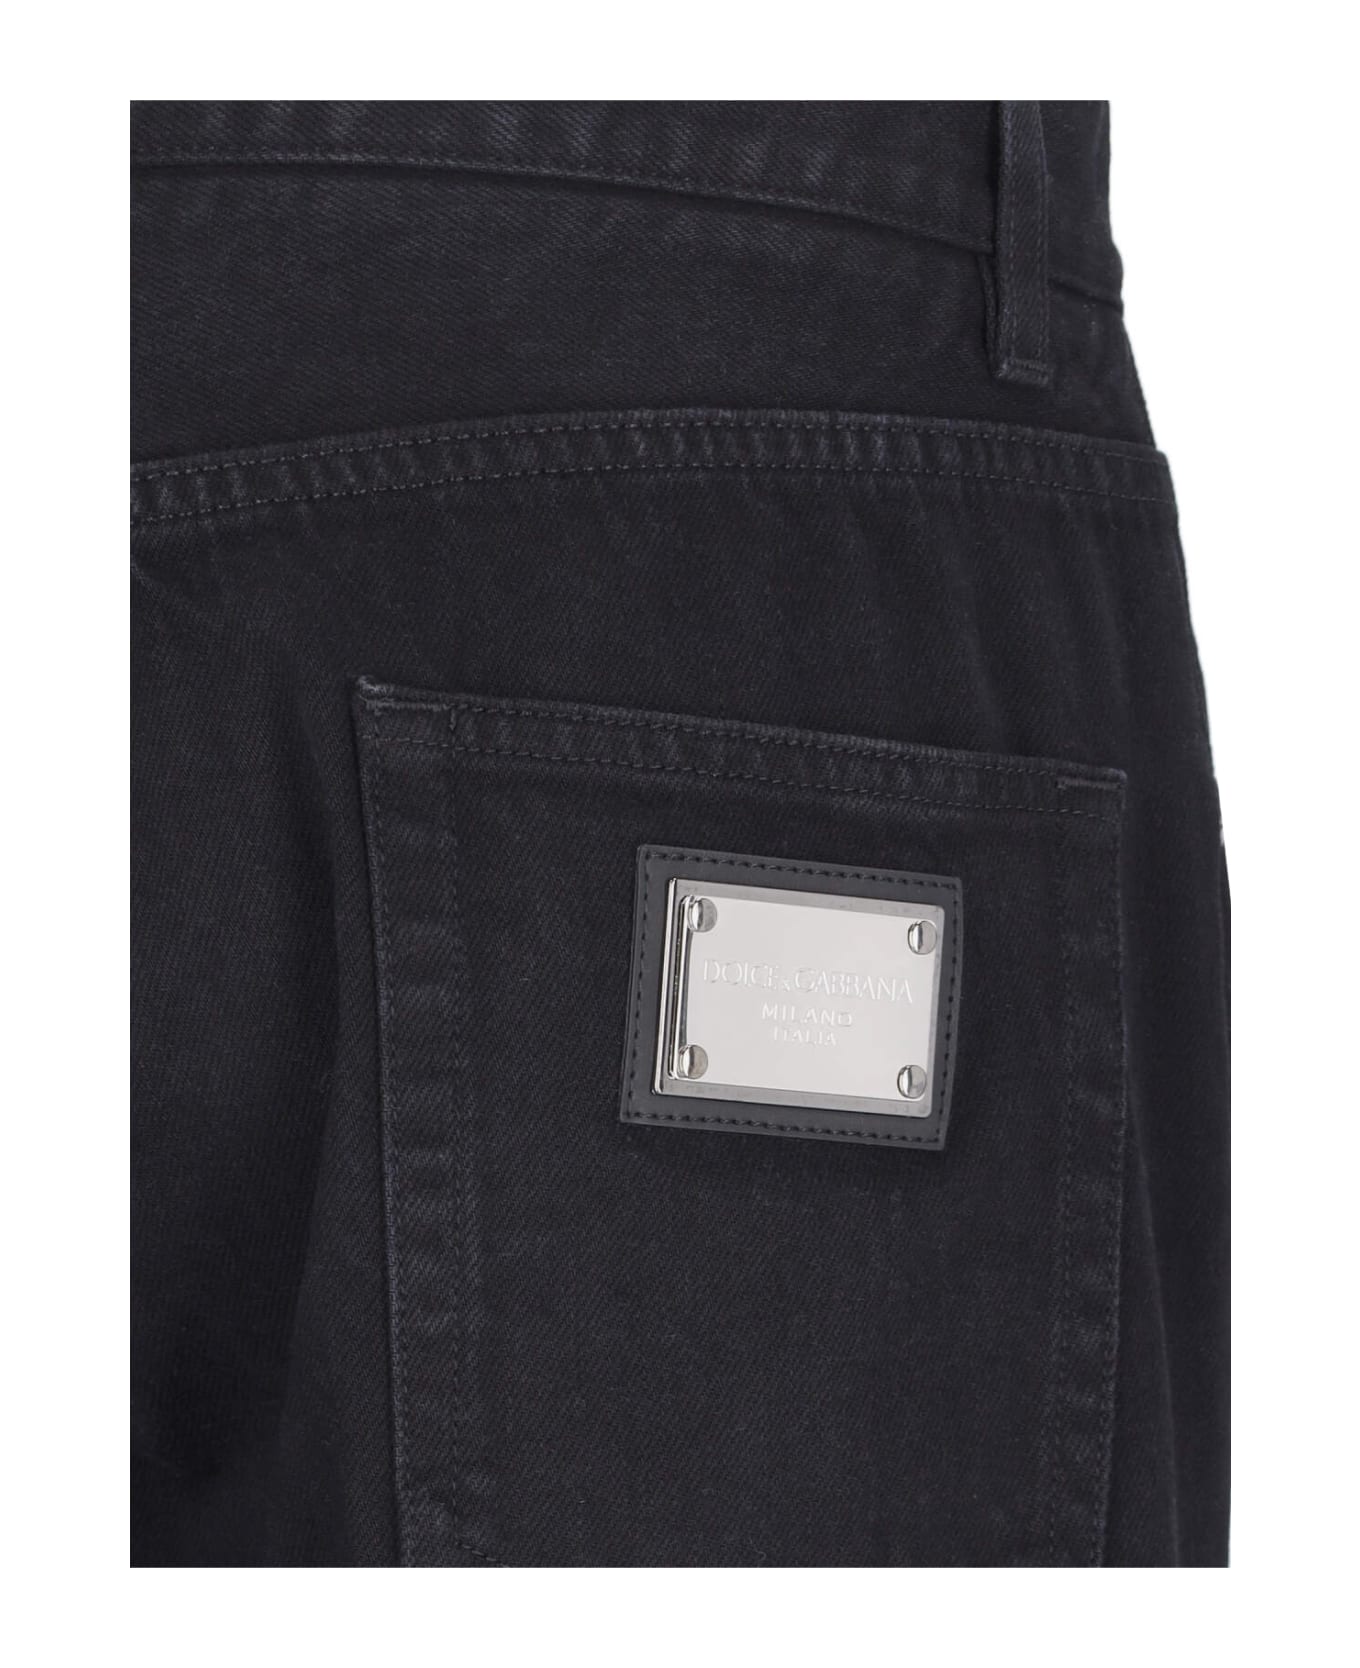 Dolce & Gabbana Straight Leg Jeans - Black デニム